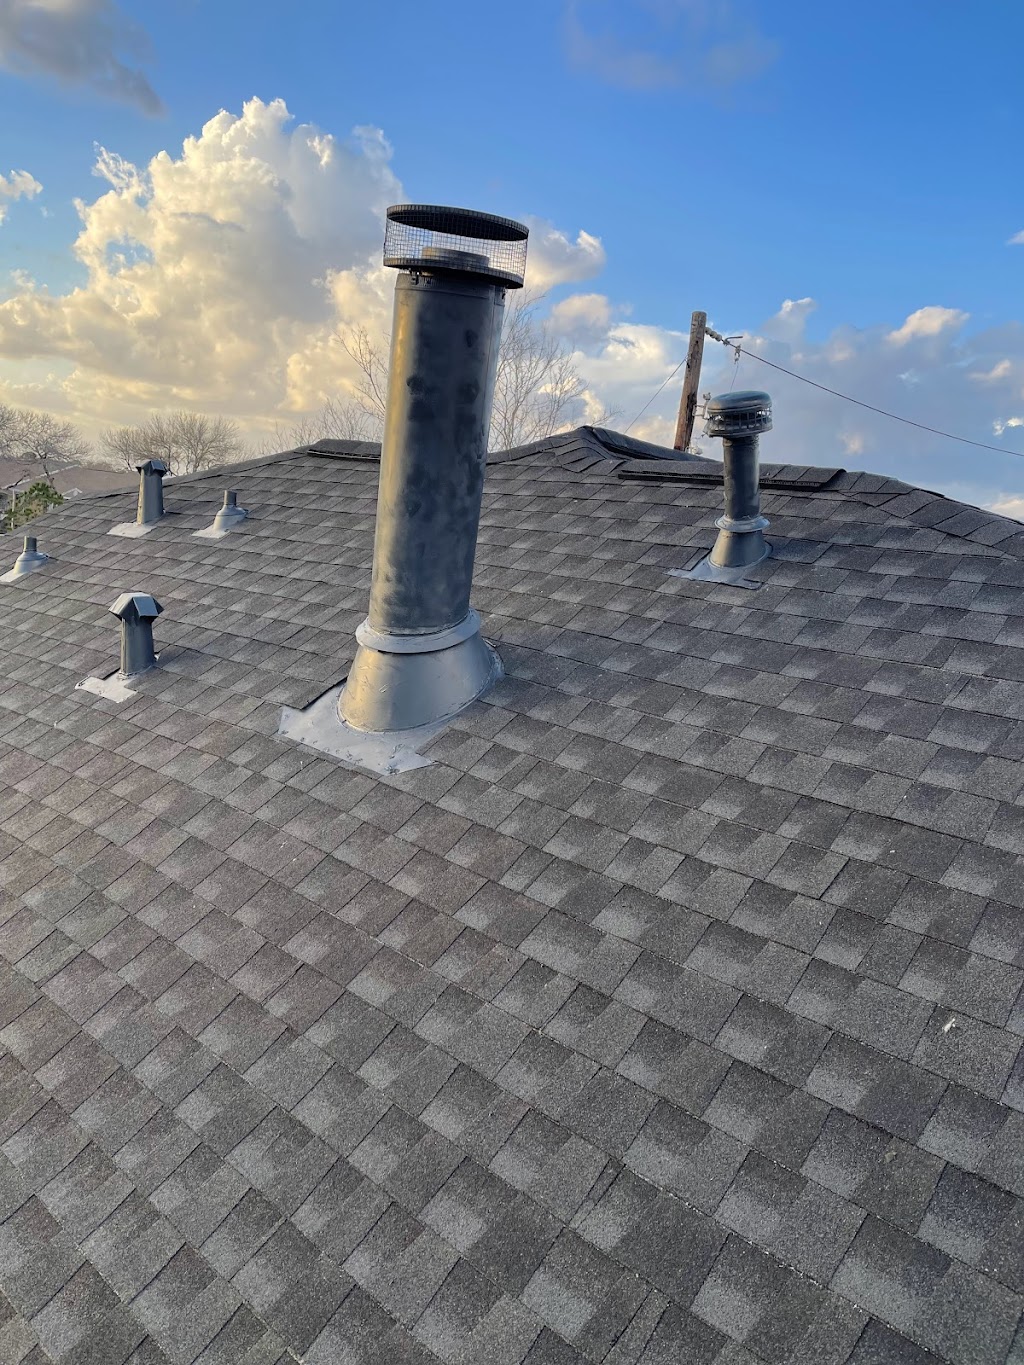 Proud Roofing & Solar LLC | 16635 Spring Cypress Rd #172, Cypress, TX 77429 | Phone: (281) 406-6114